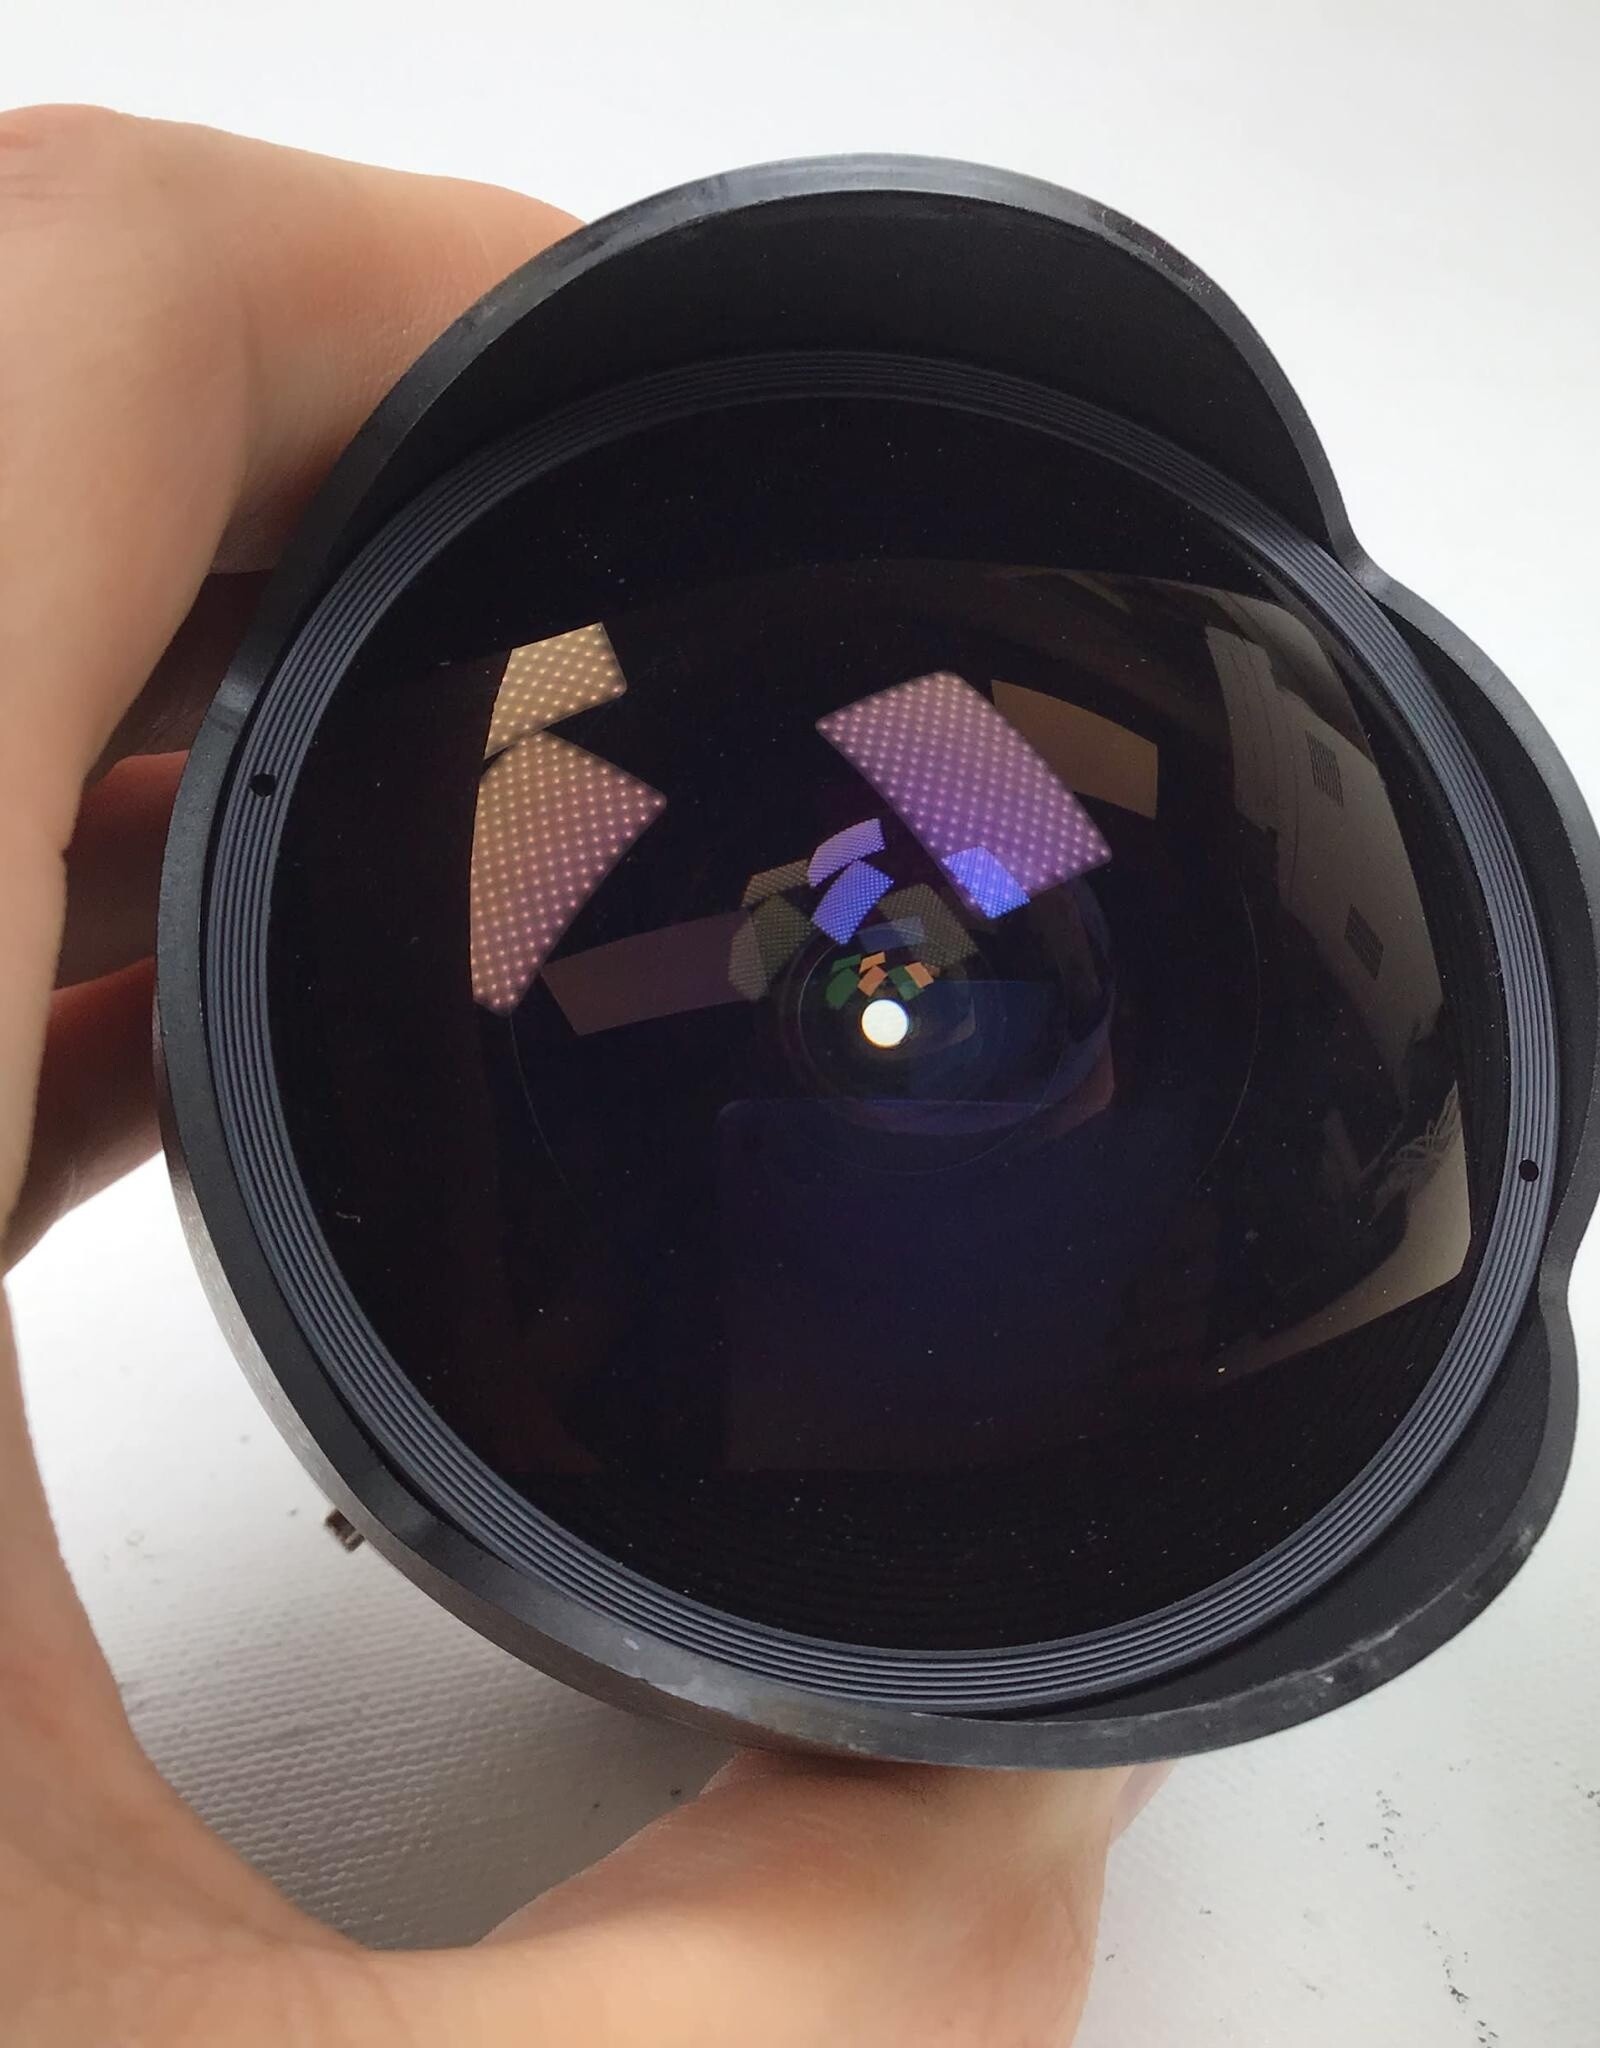 Bower 8mm f3.5 CS Fisheye Lens for Pentax Used Good